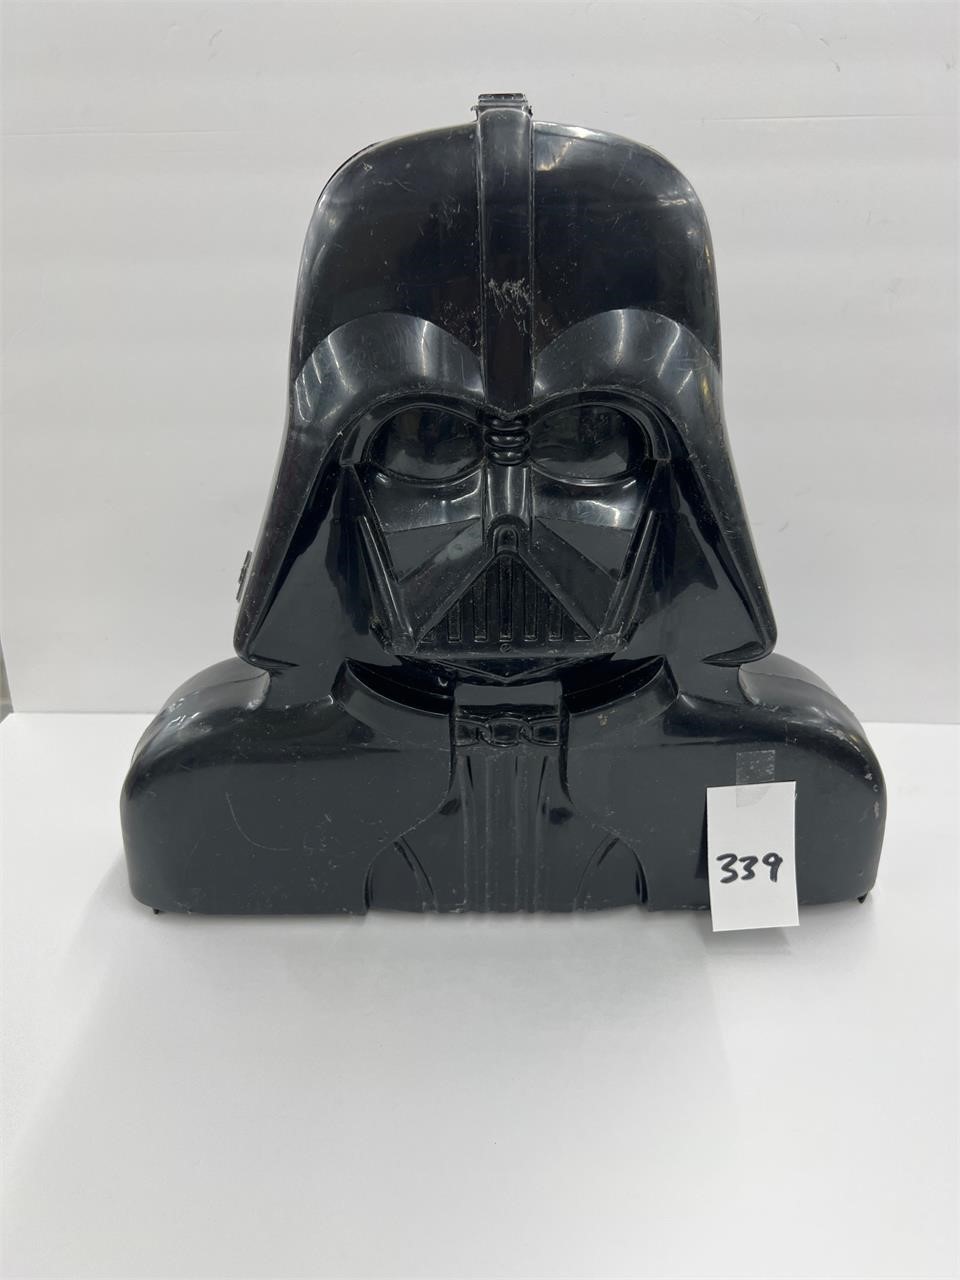 Darth Vader Star Wars figure carrying case